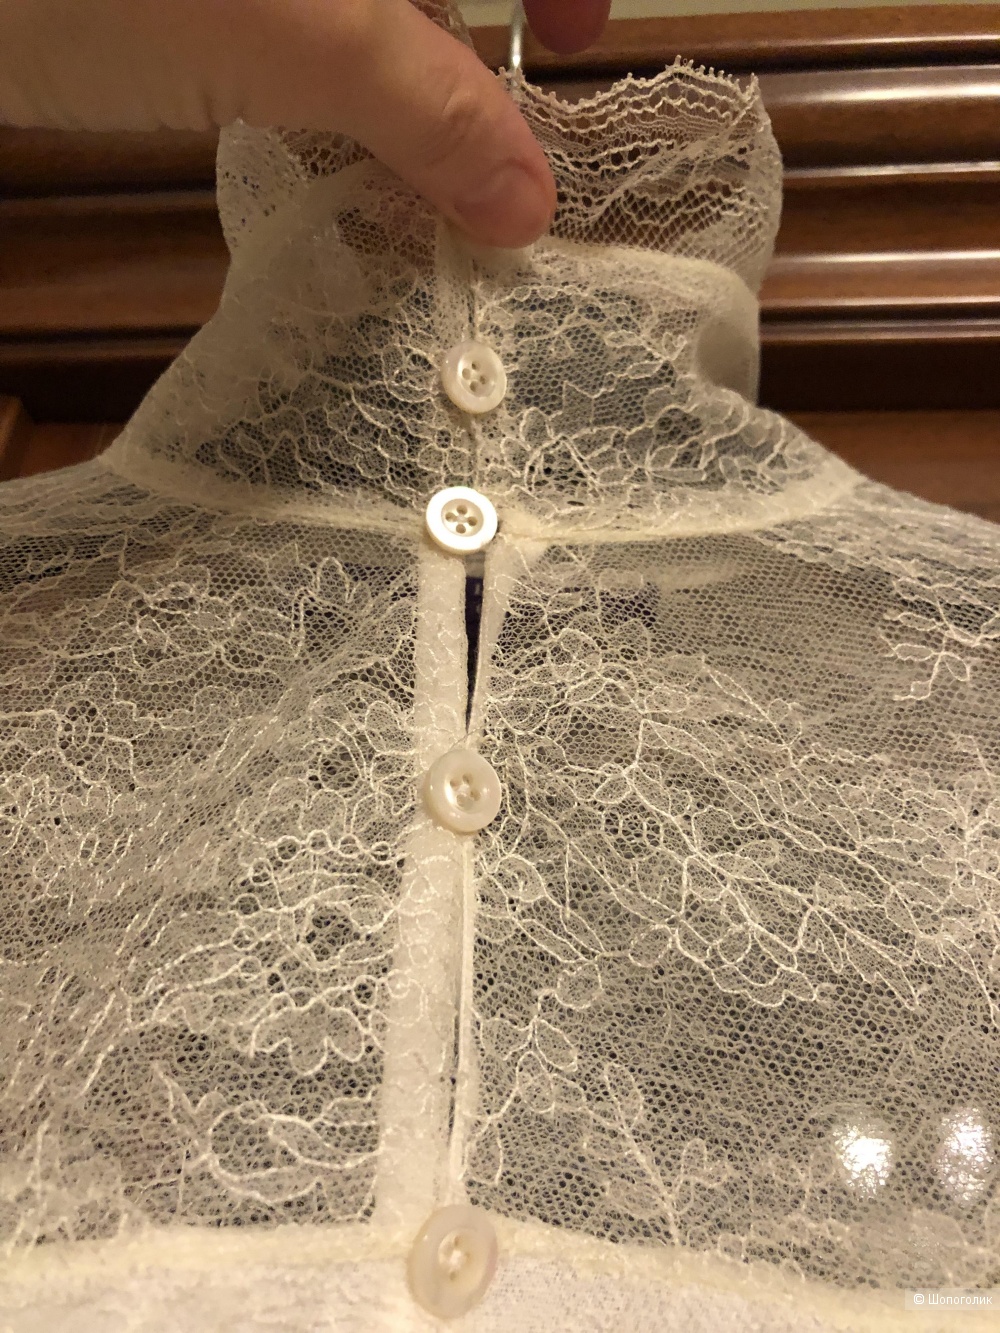 Блуза Ralph Lauren Collection